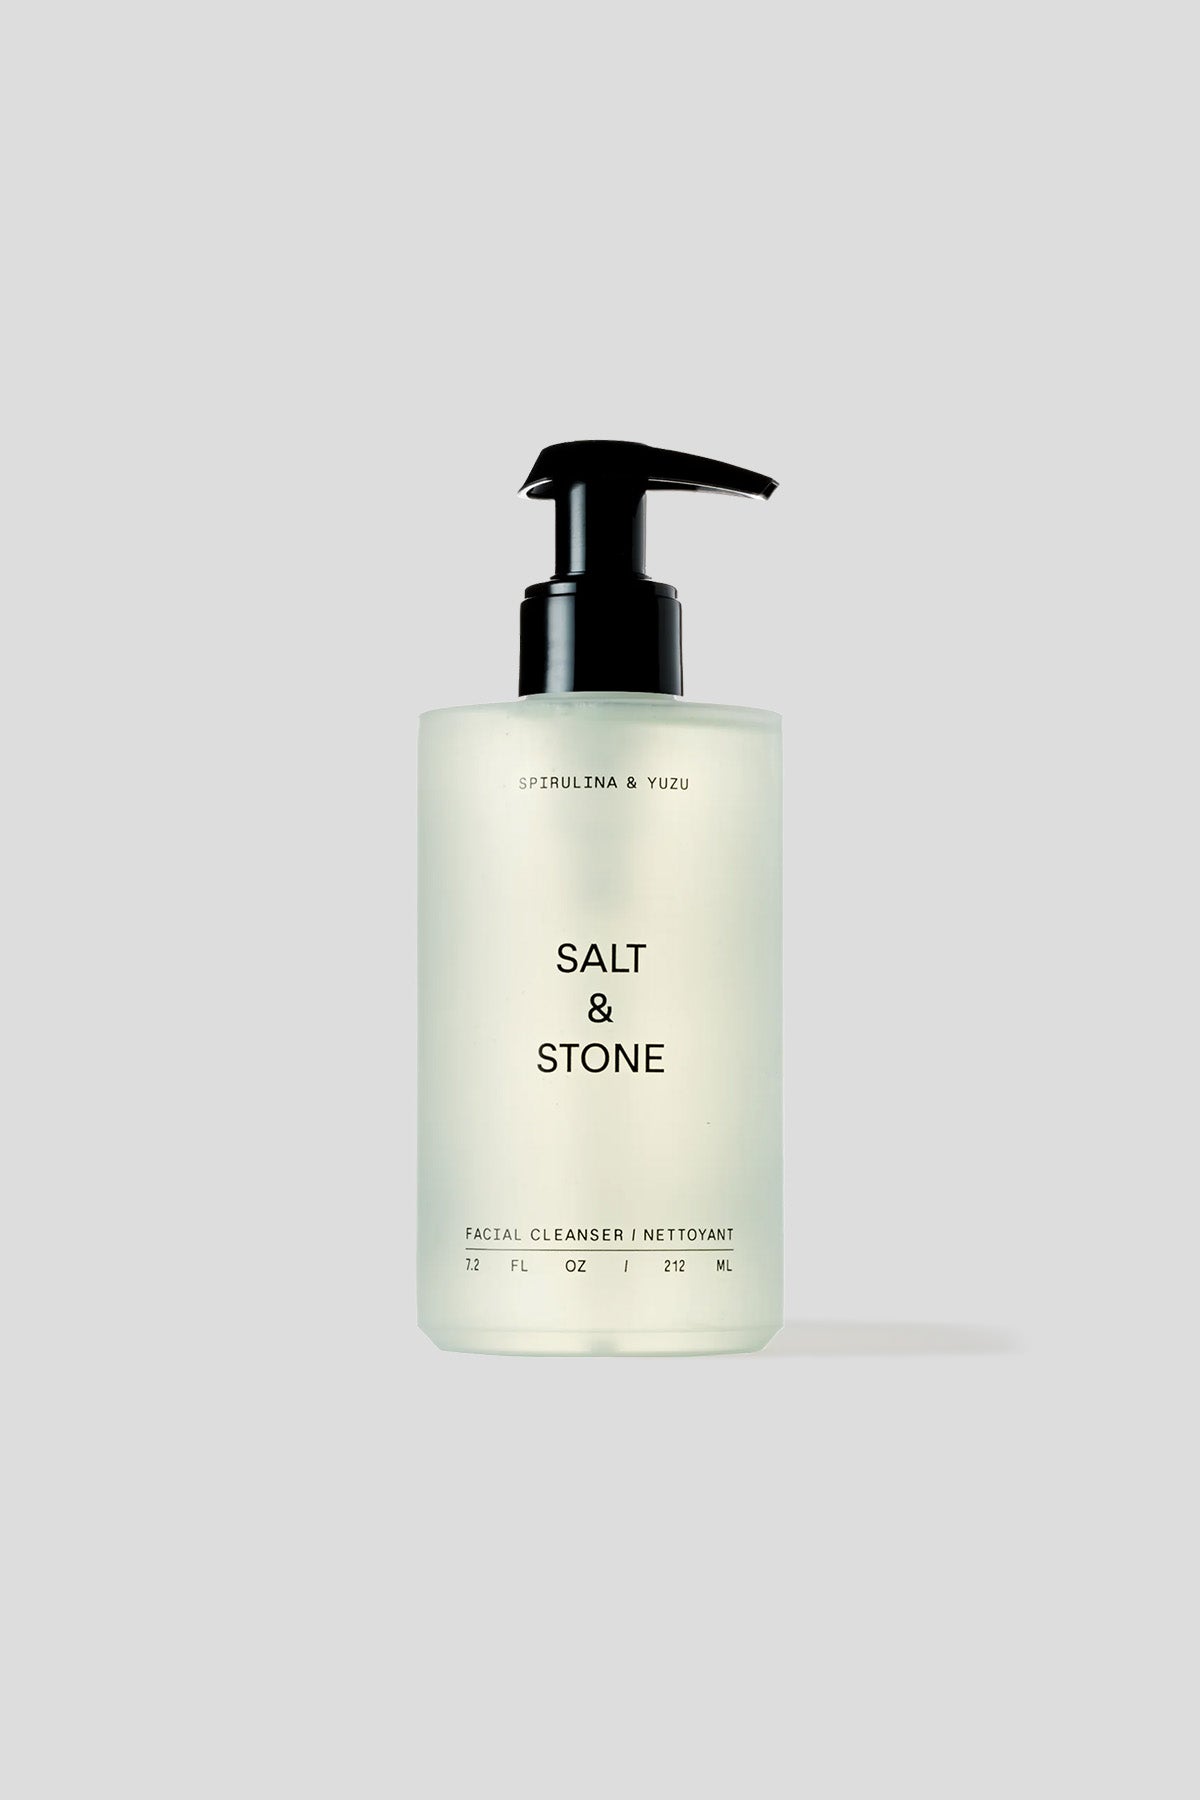 salt & stone - SPIRULINA AND YUZU FACIAL CLEANSER - LE LABO STORE